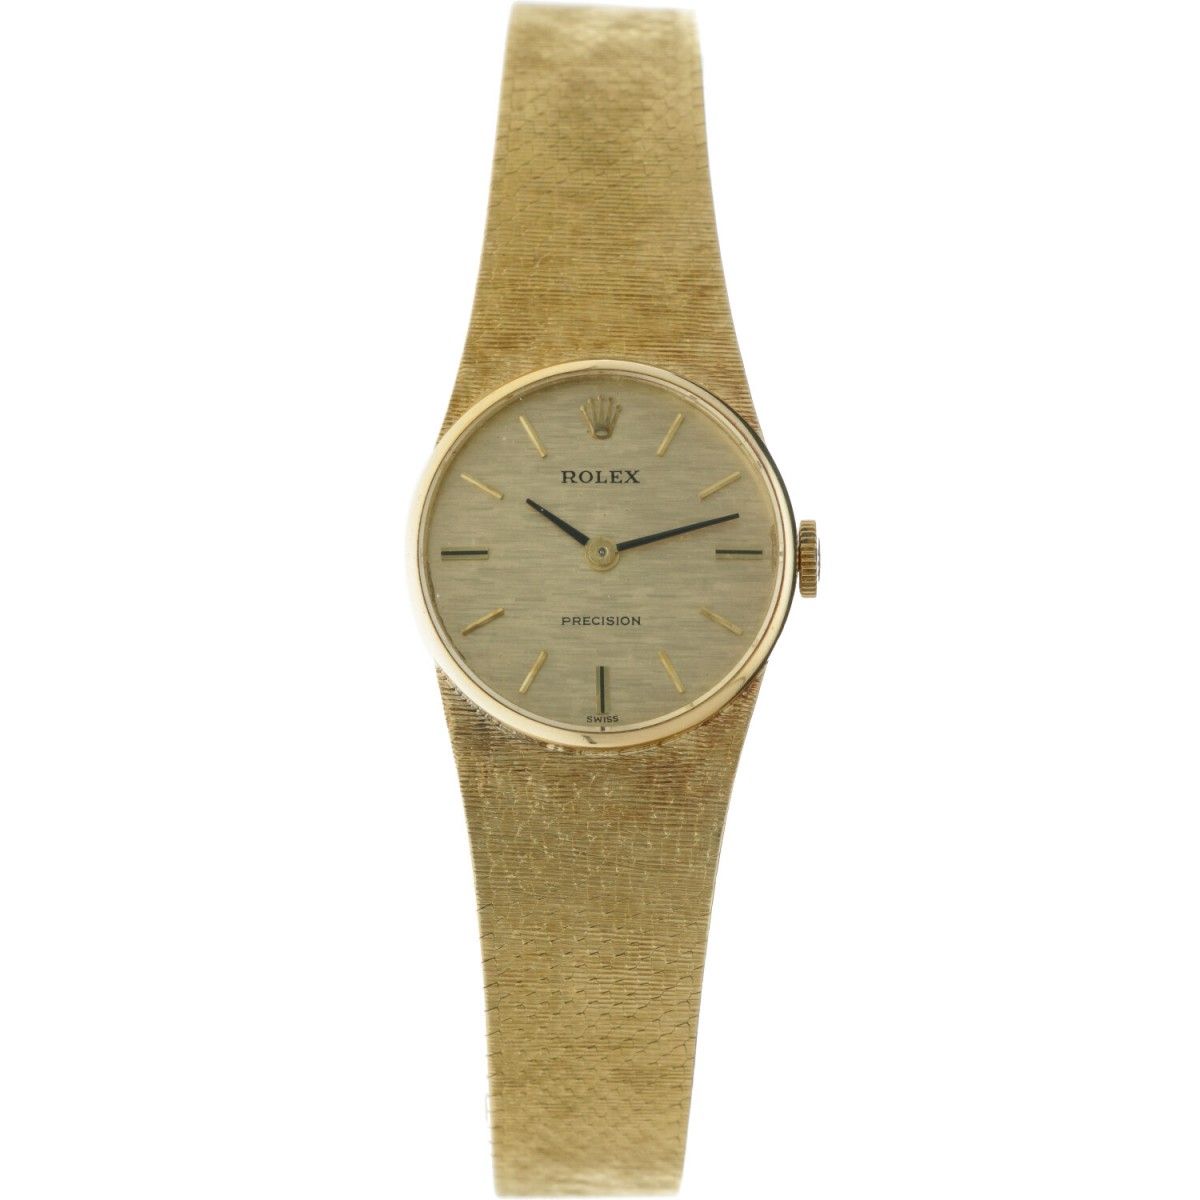 Rolex Precision - Ladies watch - apprx. 1971. Cassa: oro giallo (18 kt.) - bracc&hellip;